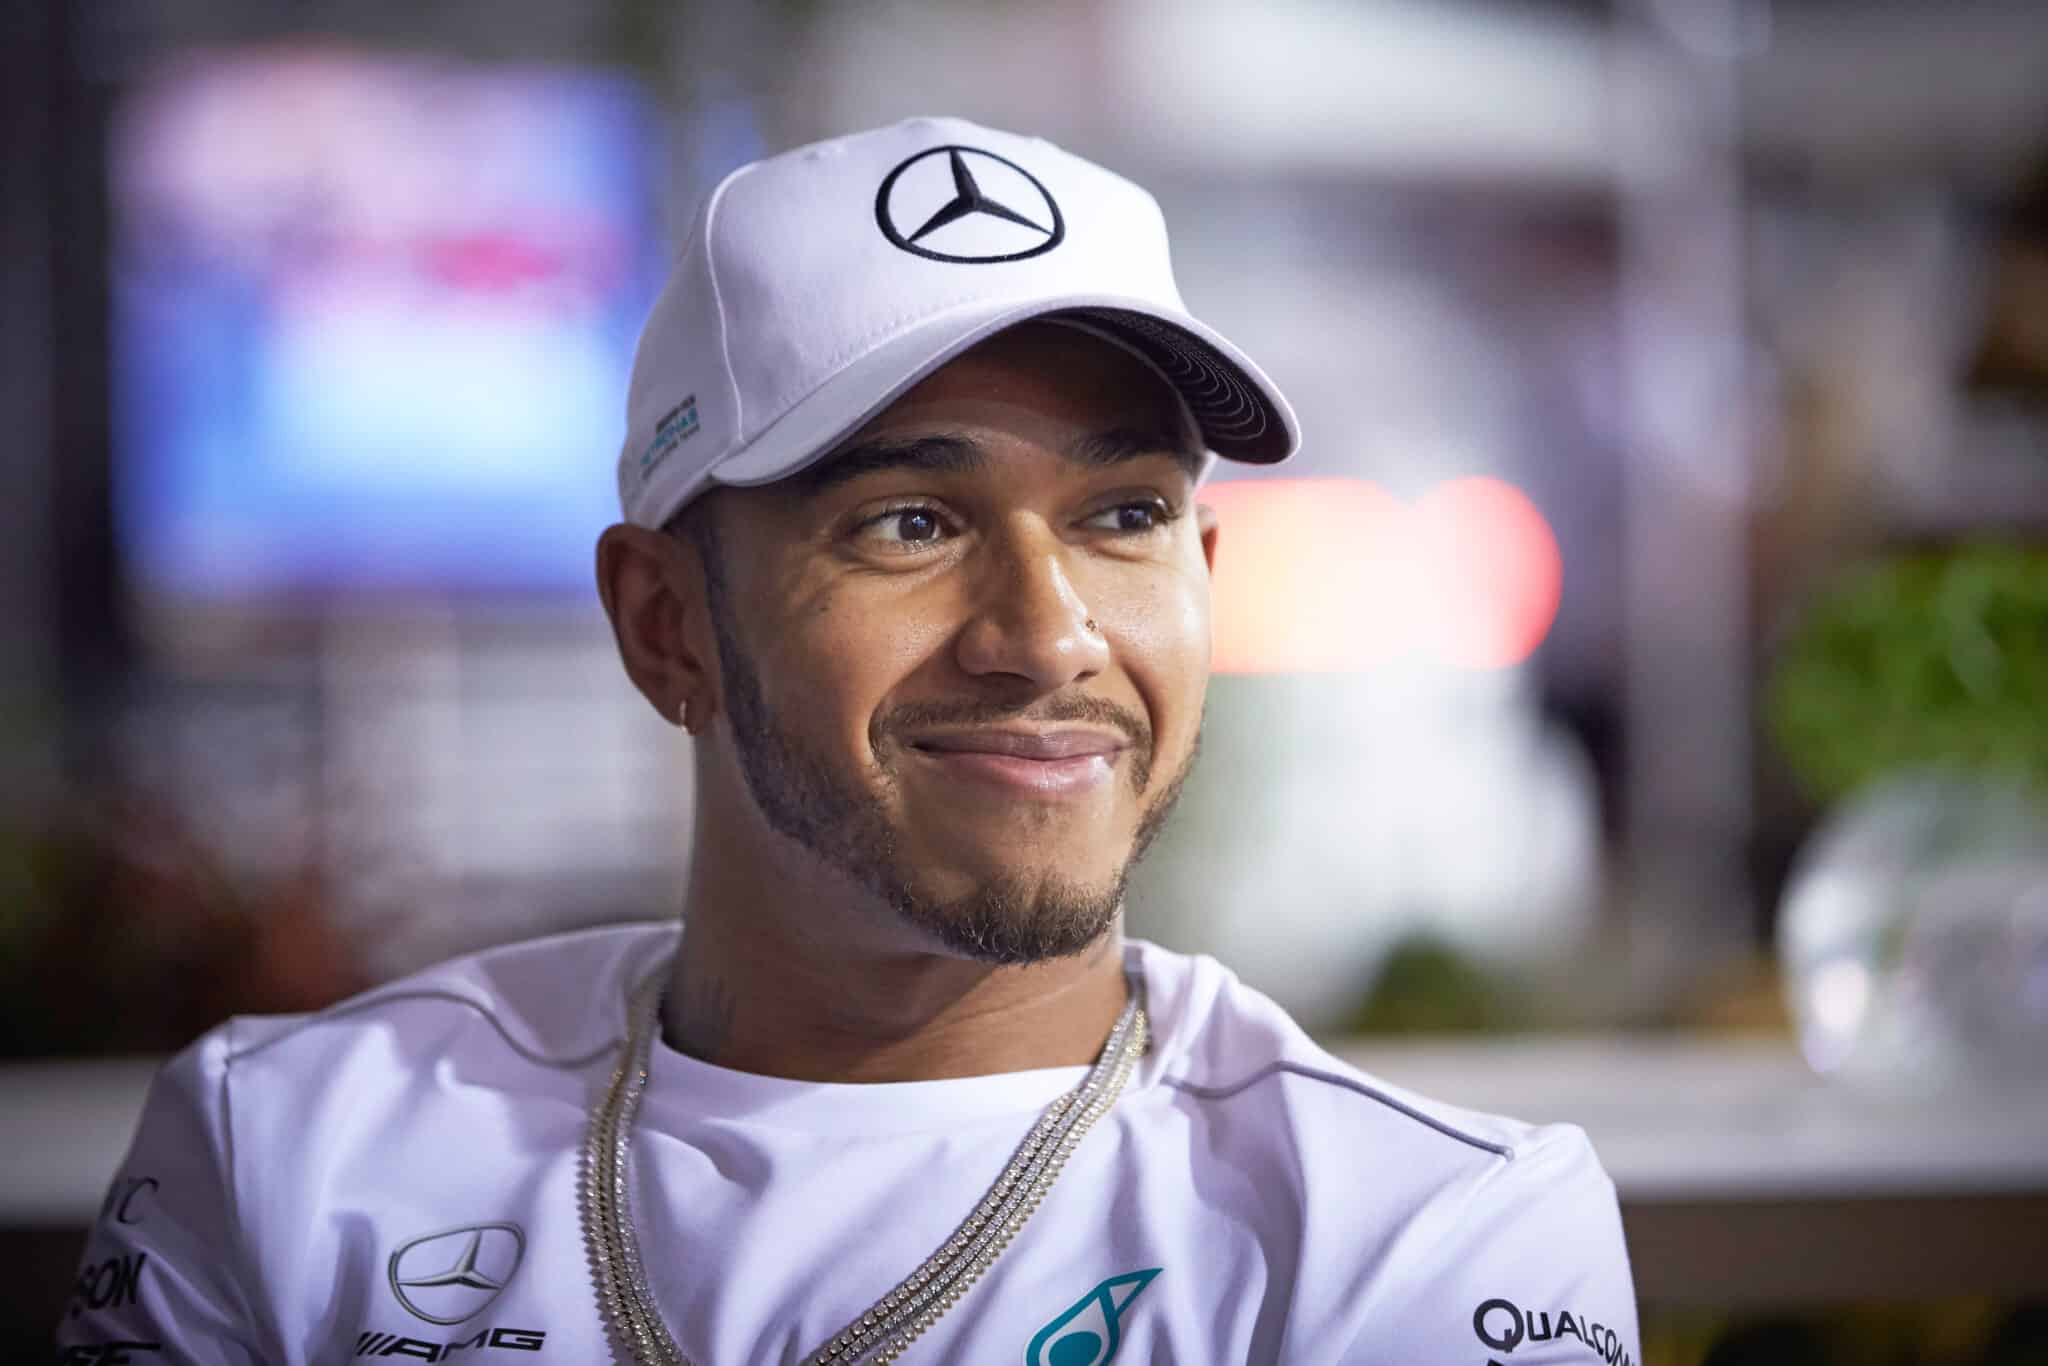 - Lewis Hamilton Unveils His New Team at F1 Miami Grand Prix after Angela Cullen exit